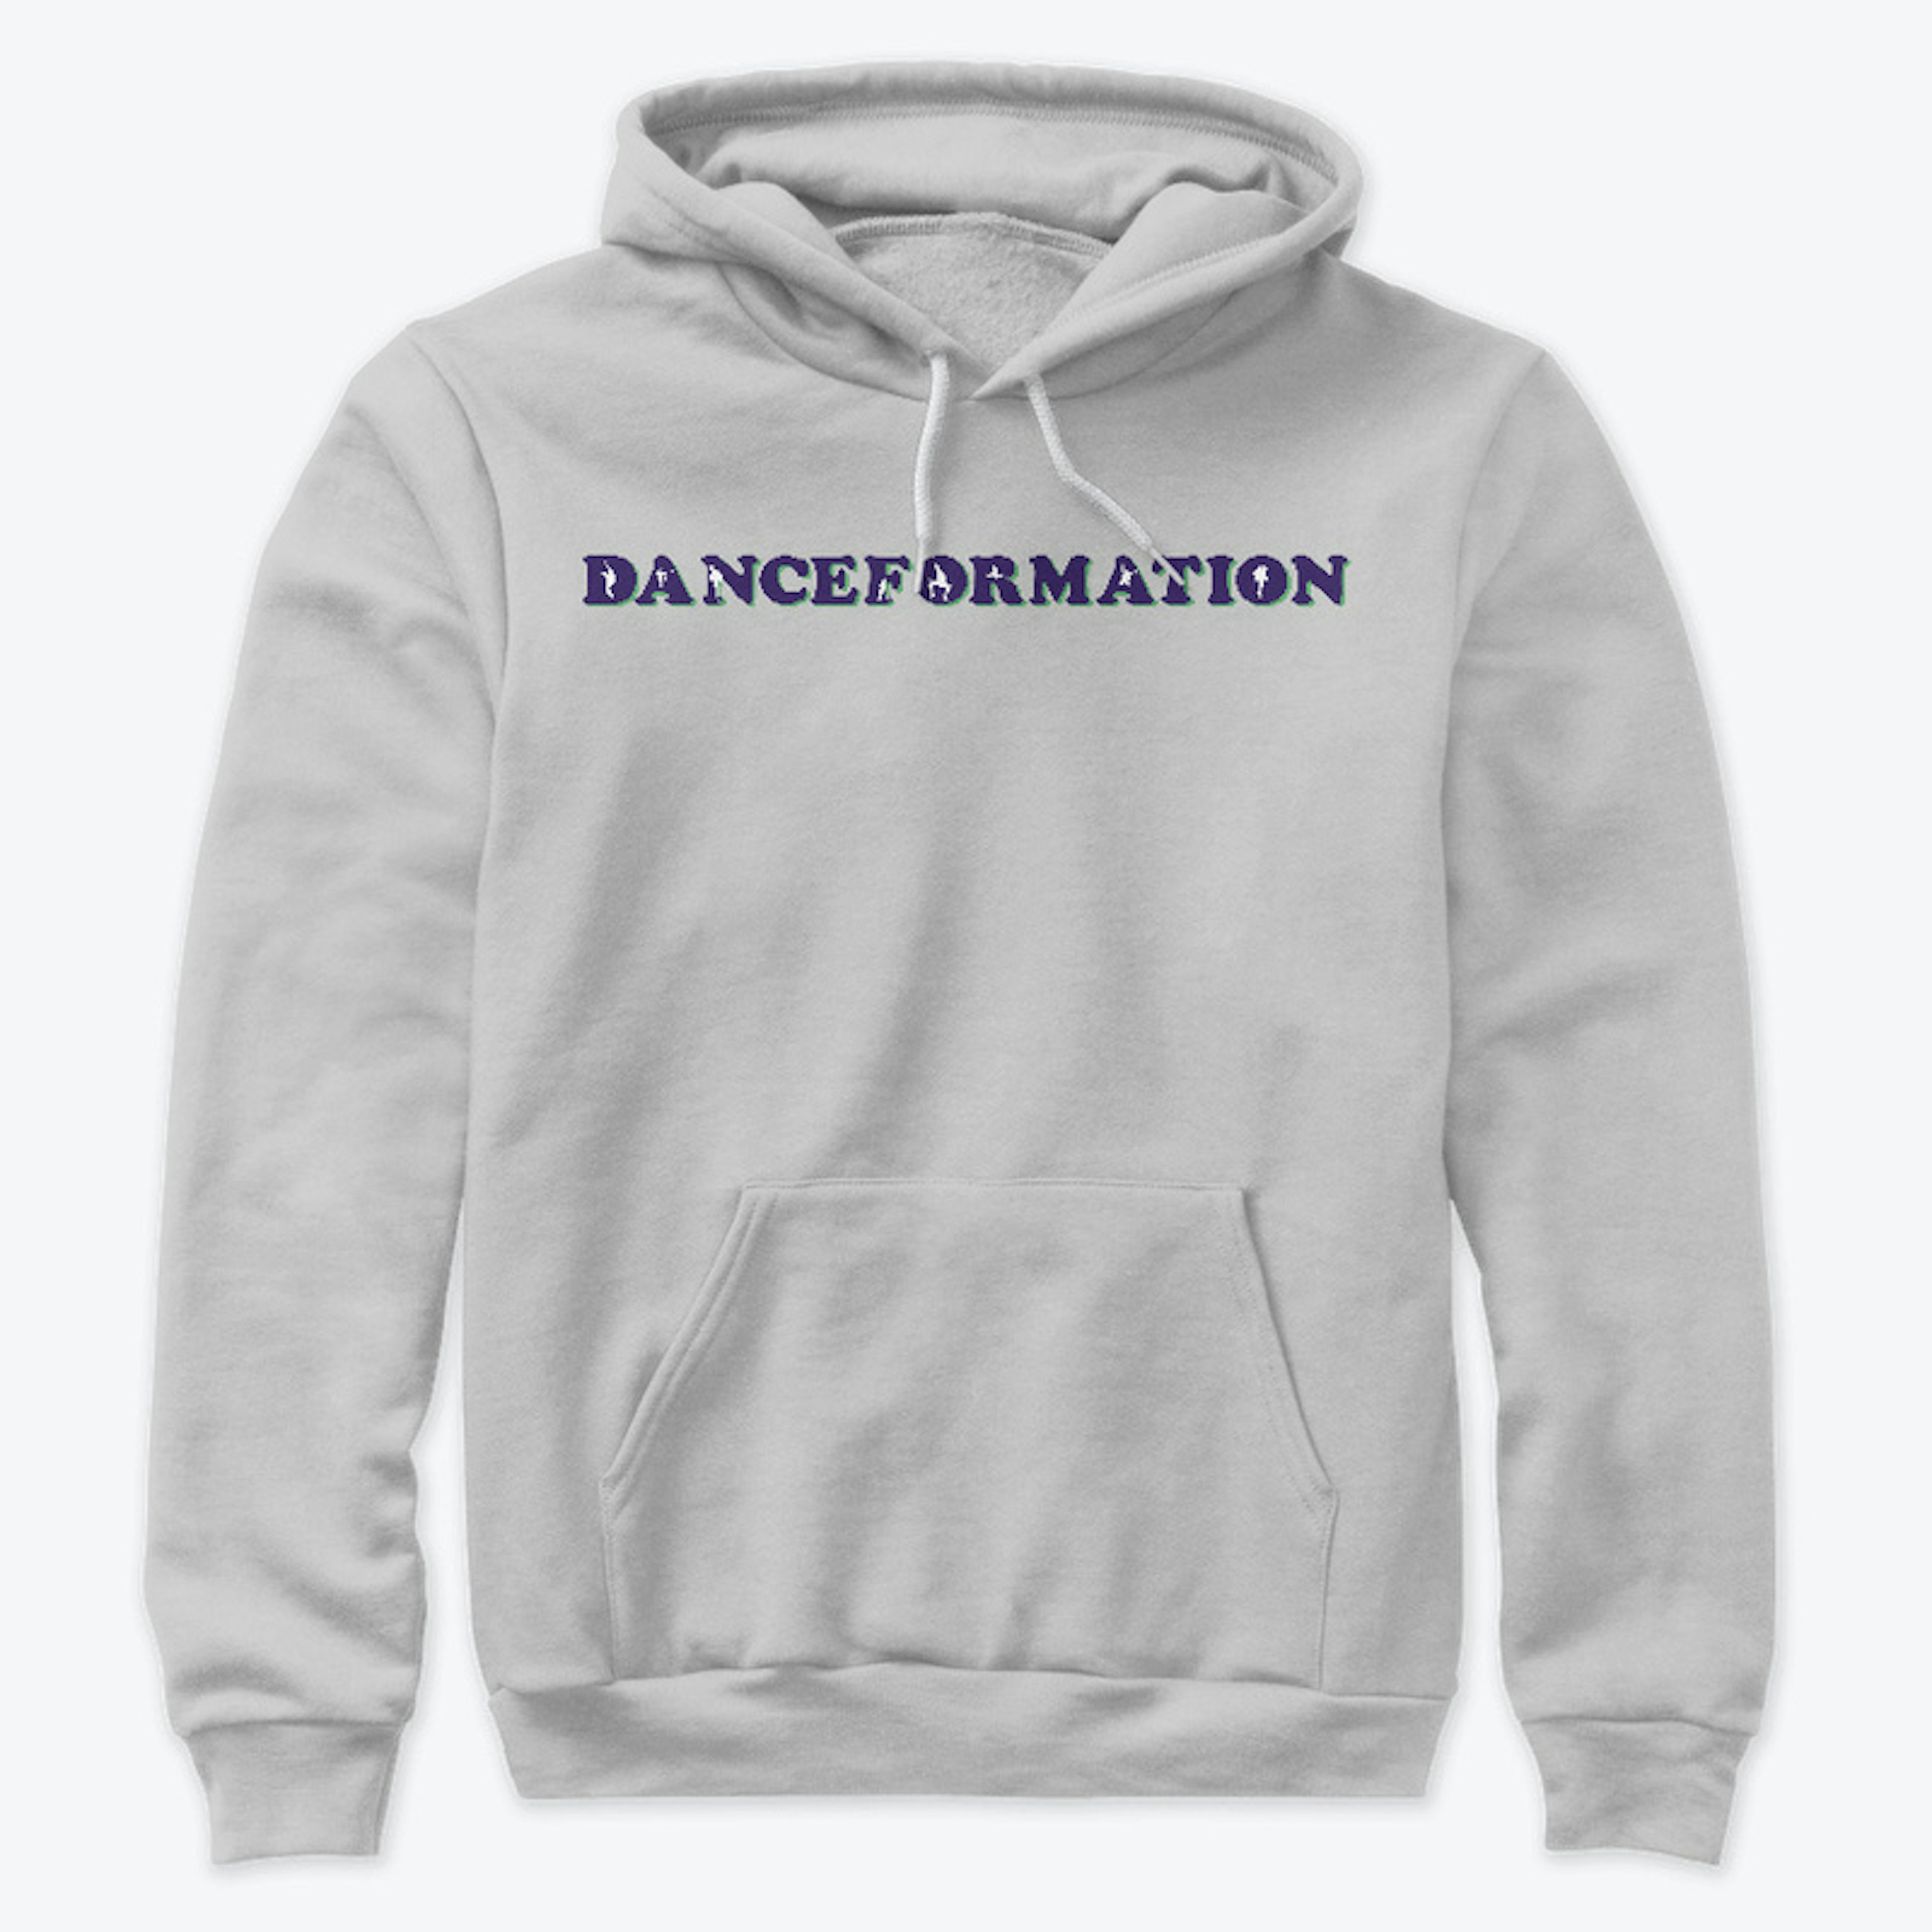 Danceformation